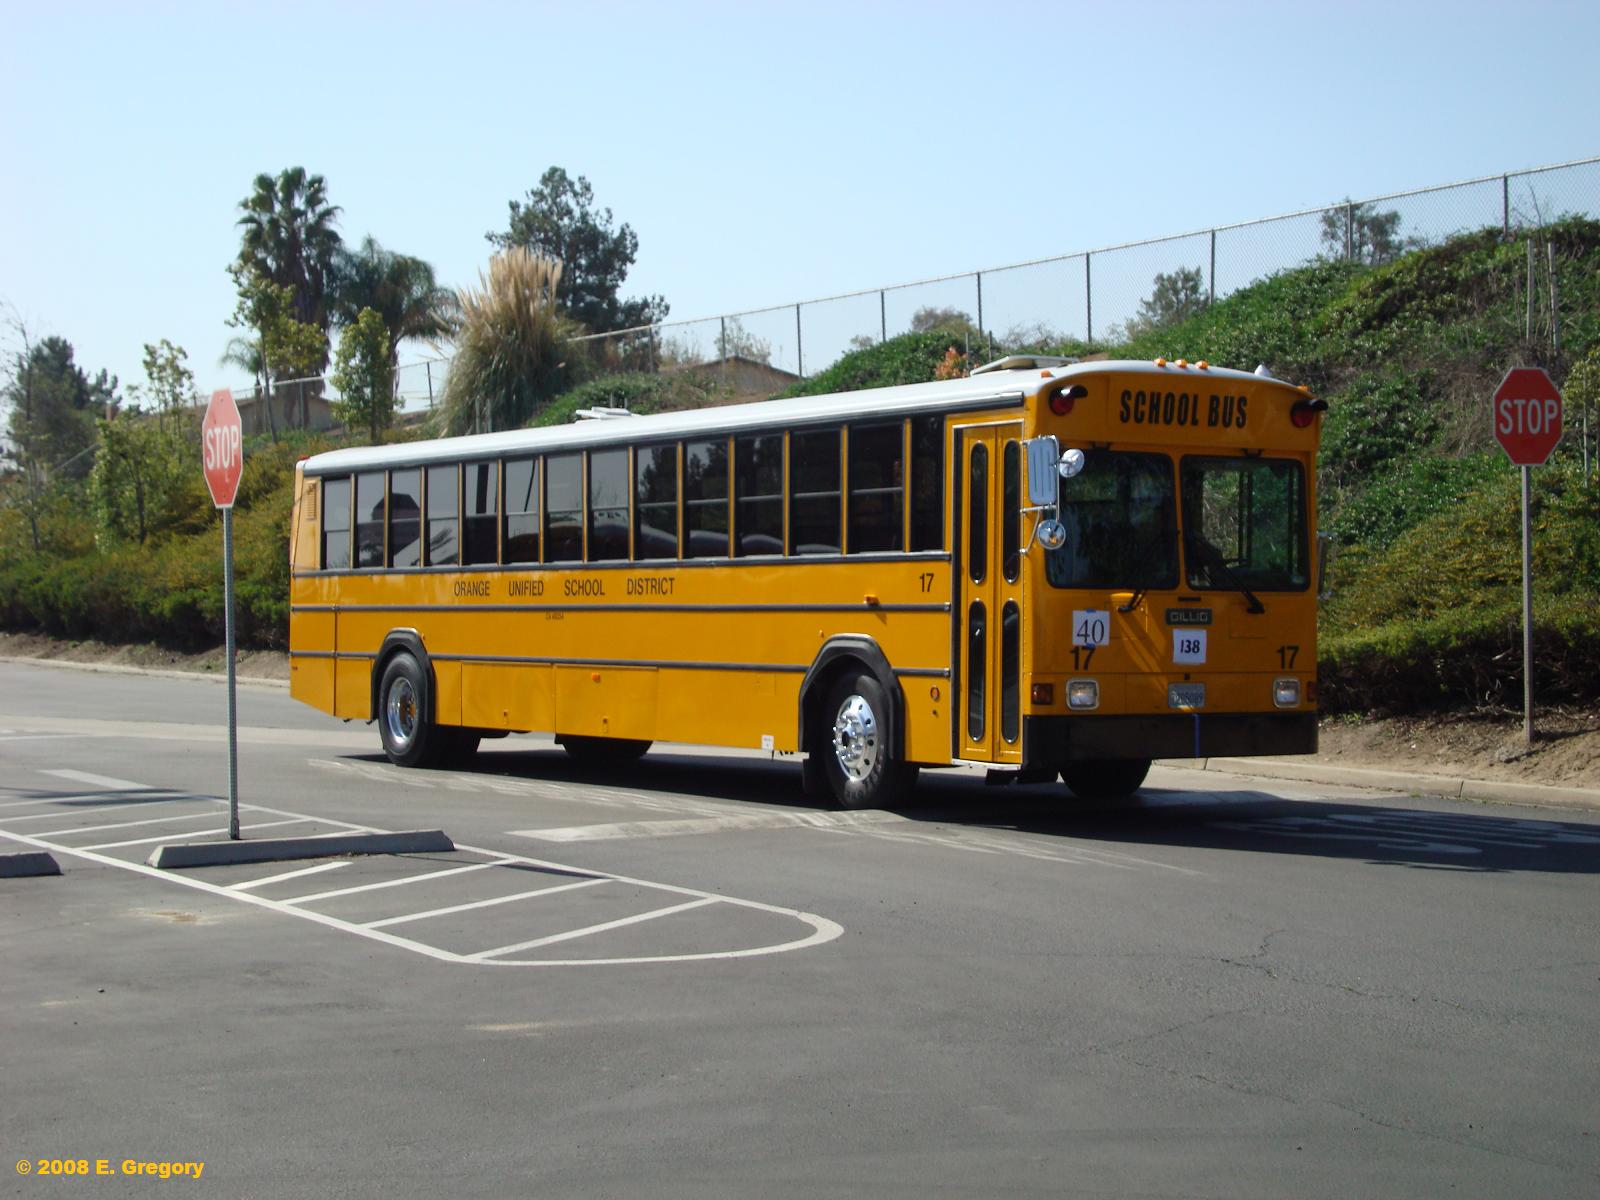 Gillig Phantom school bus